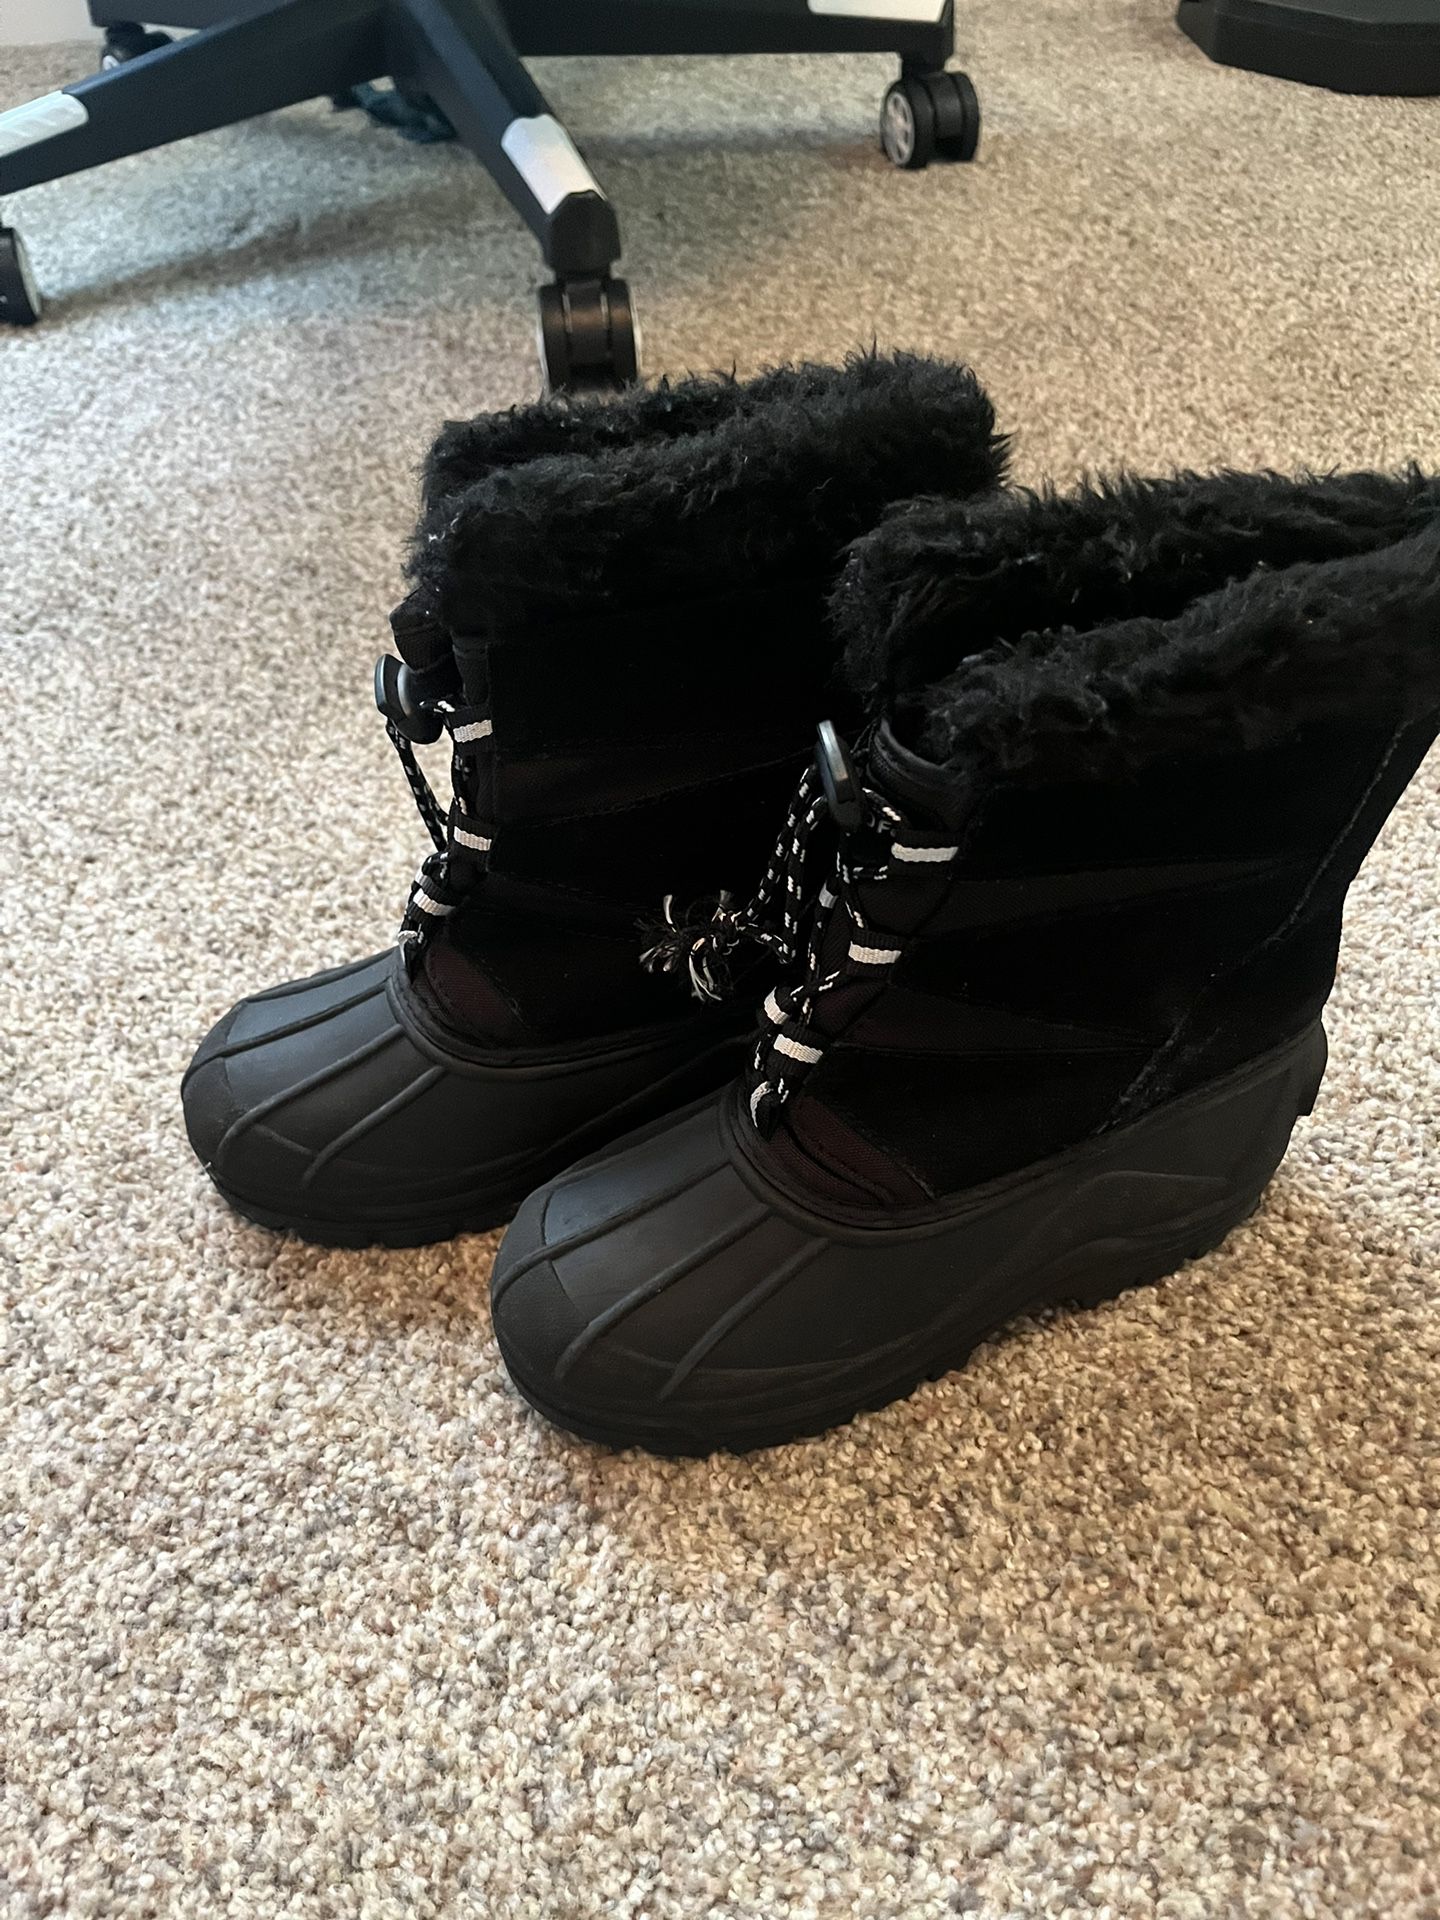 Unisex Snow Boots - Sz 1